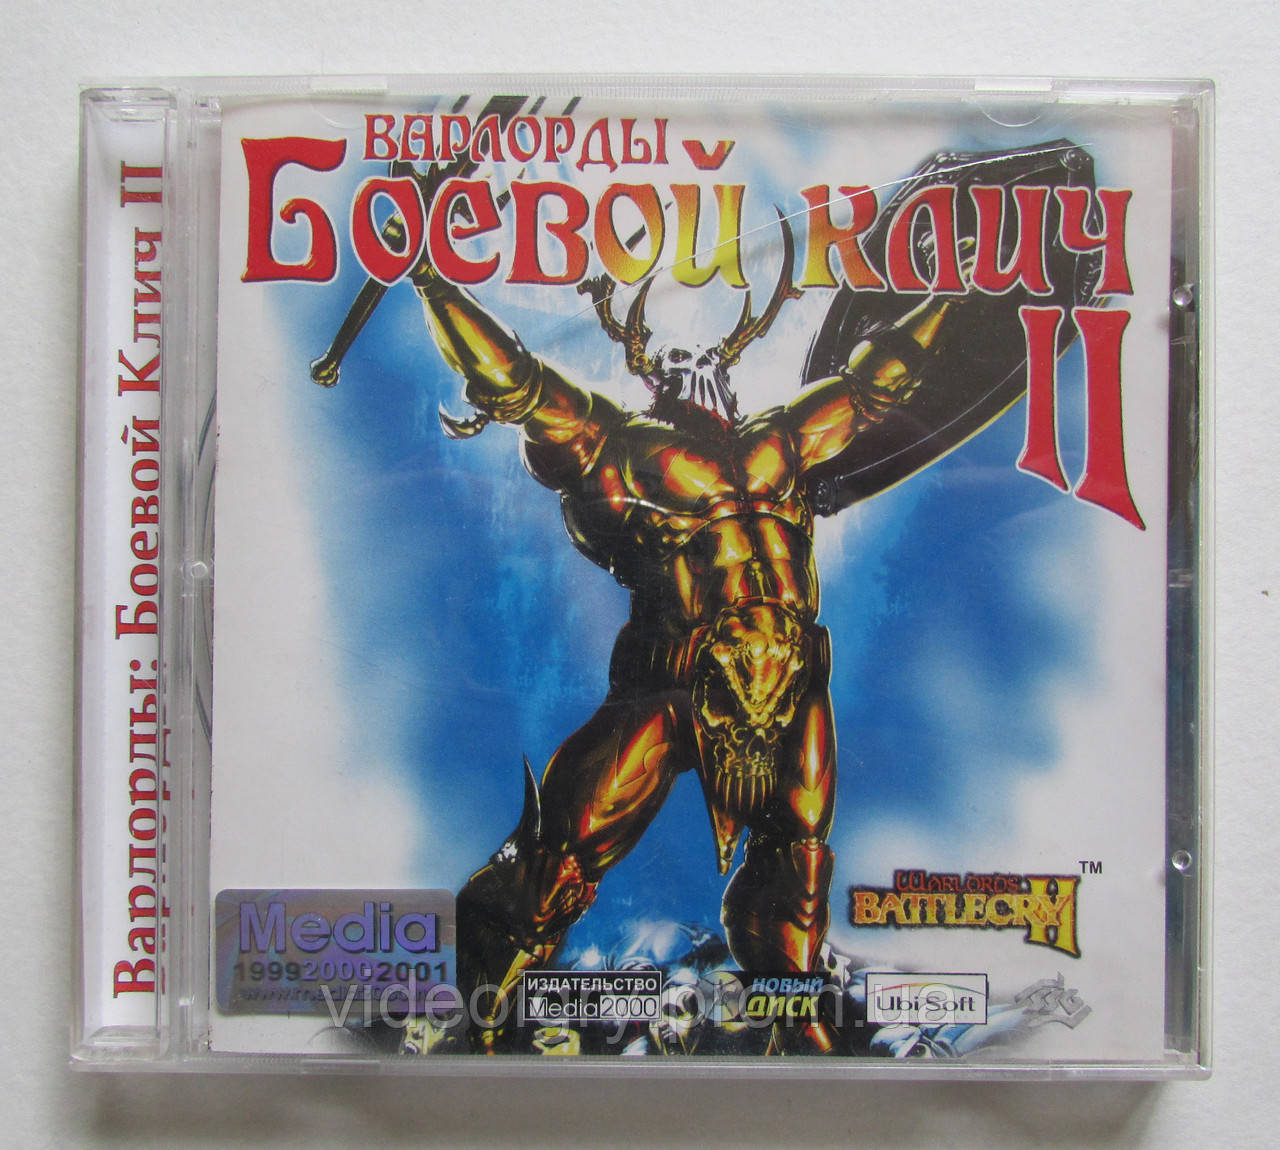 Warlords Battlecry II PC CD-ROM, ліцензійна марка України